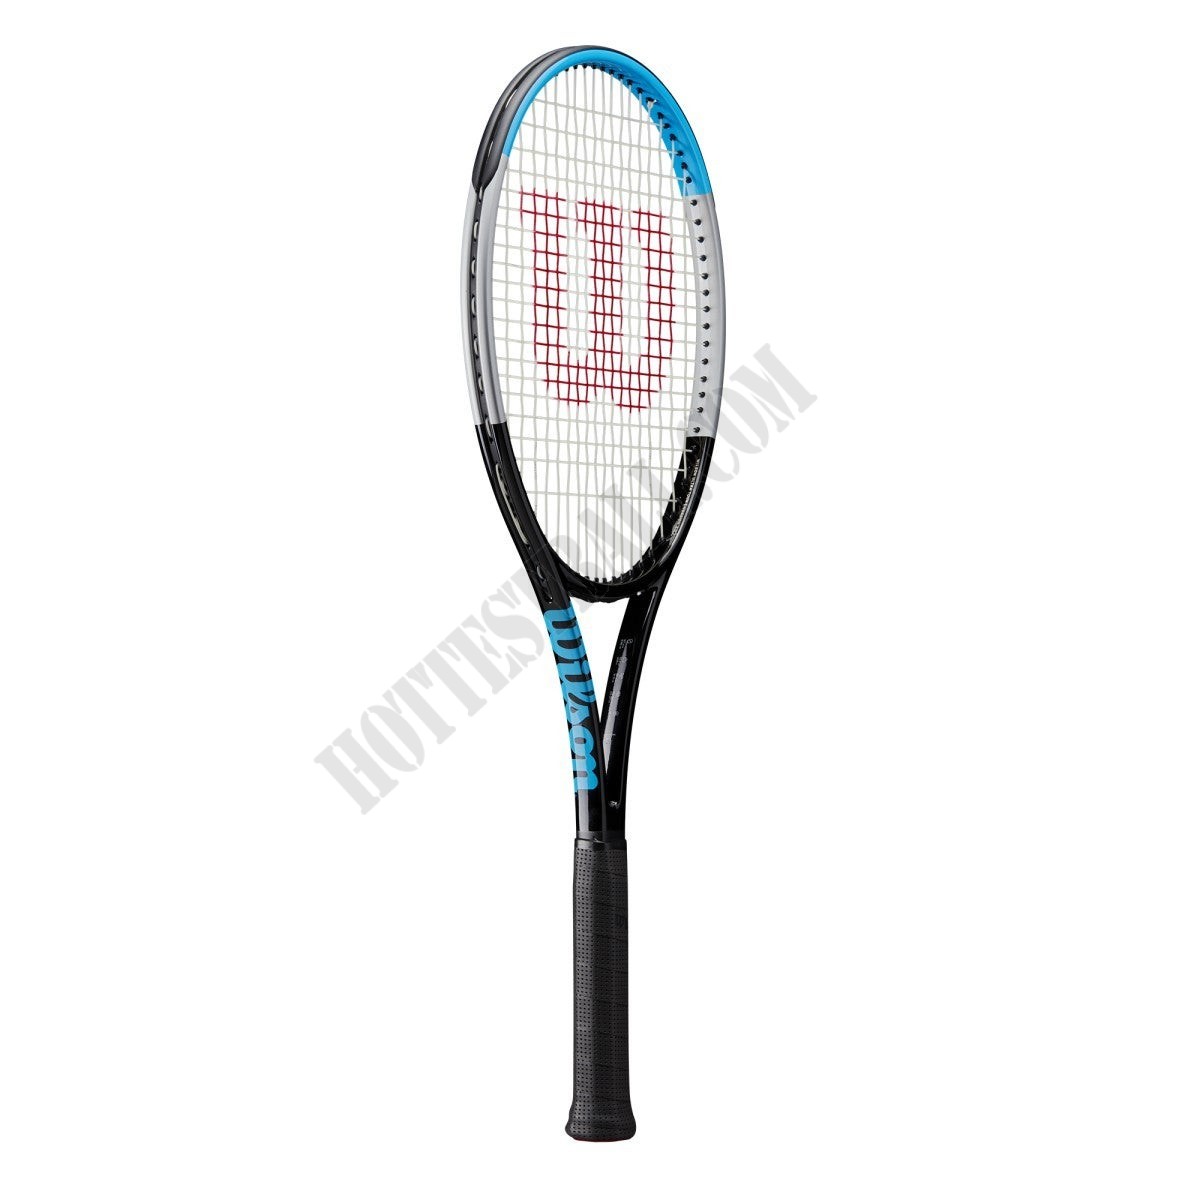 Ultra Pro v3 (18x20) Tennis Racket - Wilson Discount Store - Ultra Pro v3 (18x20) Tennis Racket - Wilson Discount Store